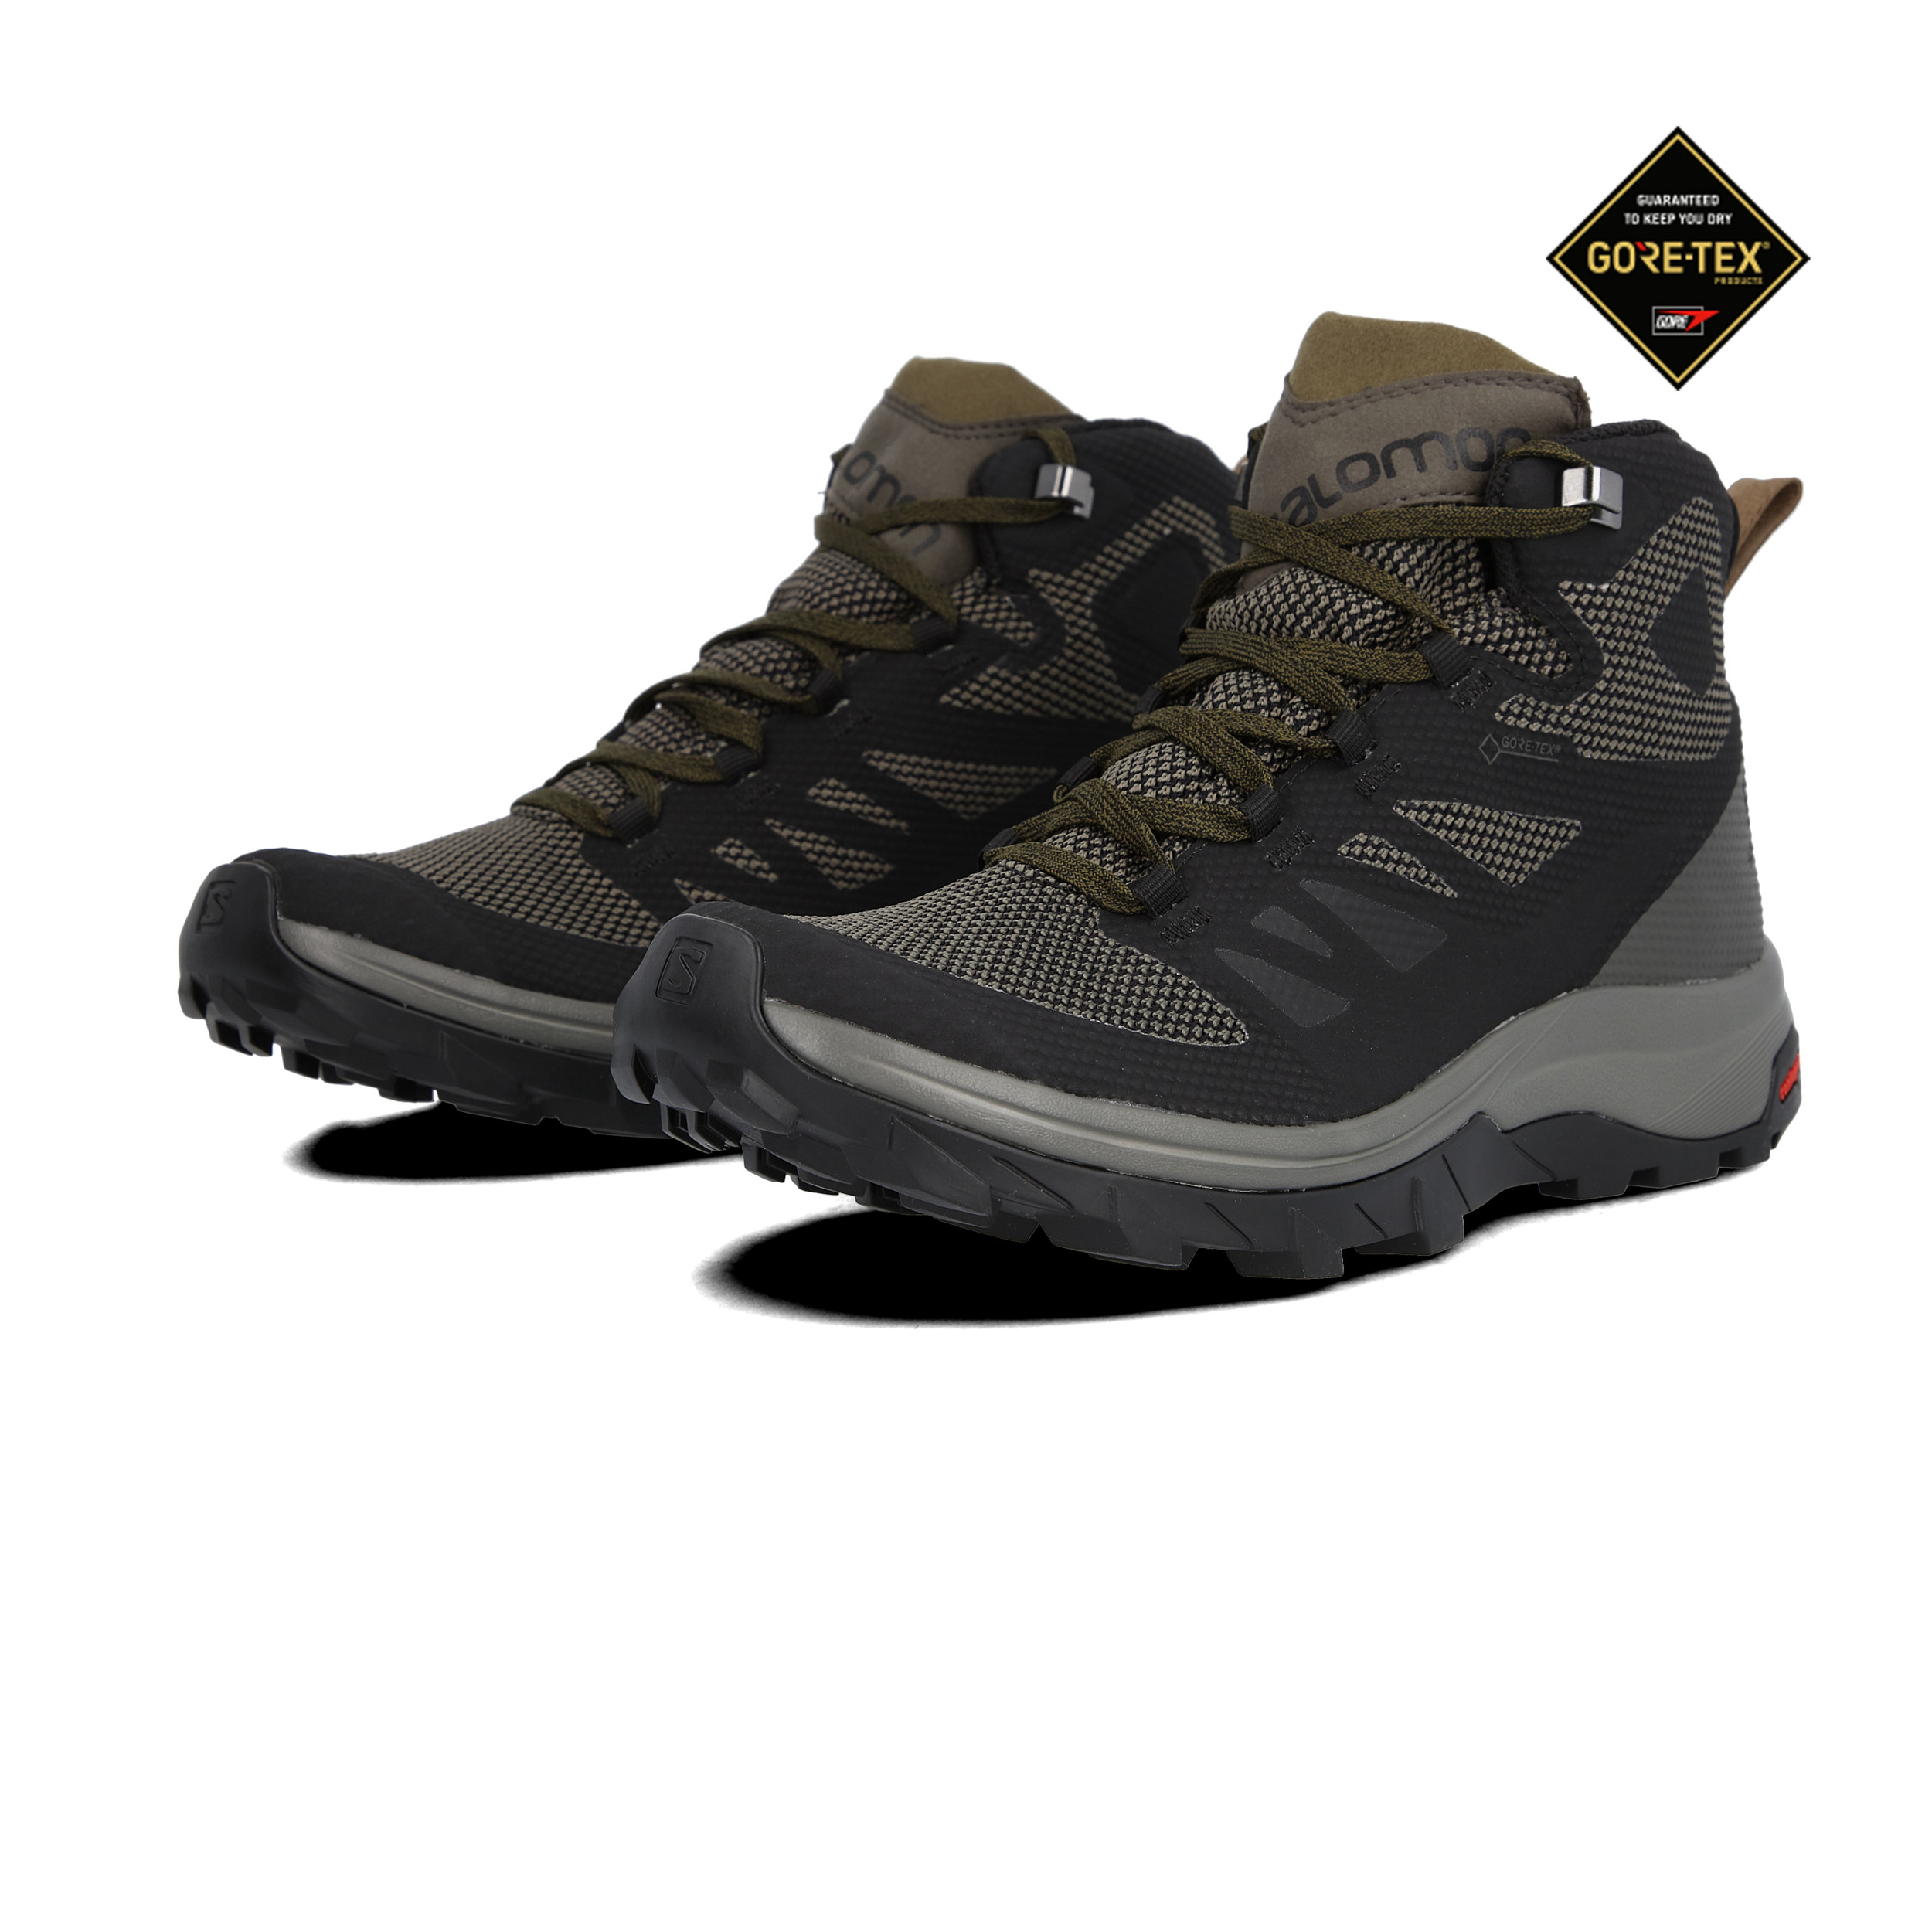 Salomon OUTline Mid GORE-TEX Walking Boots - AW20